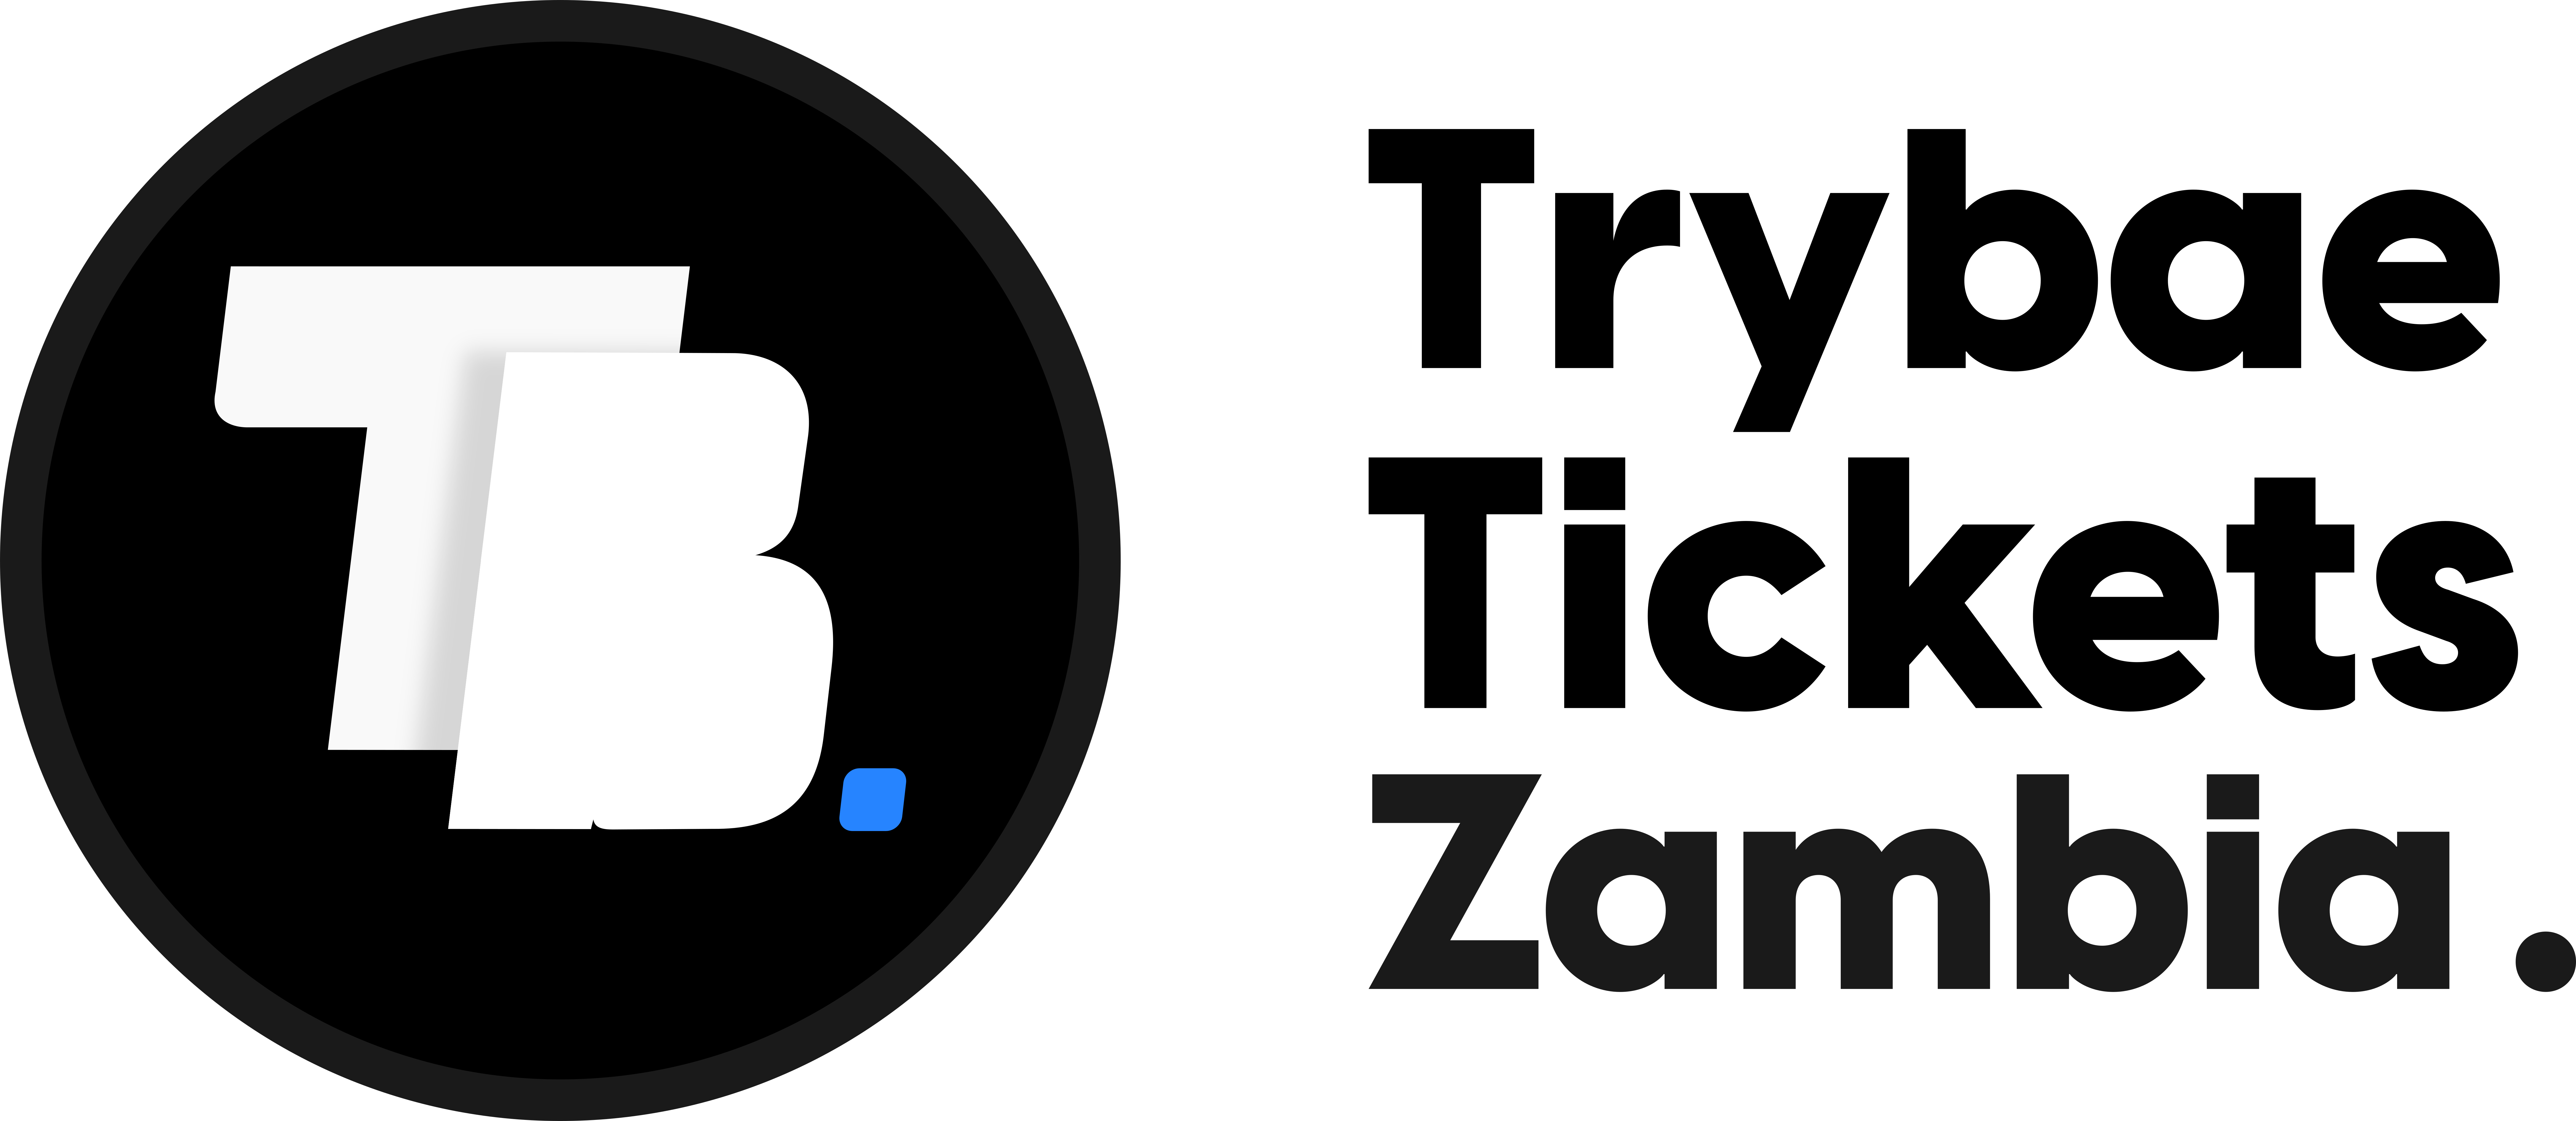 easybank logo